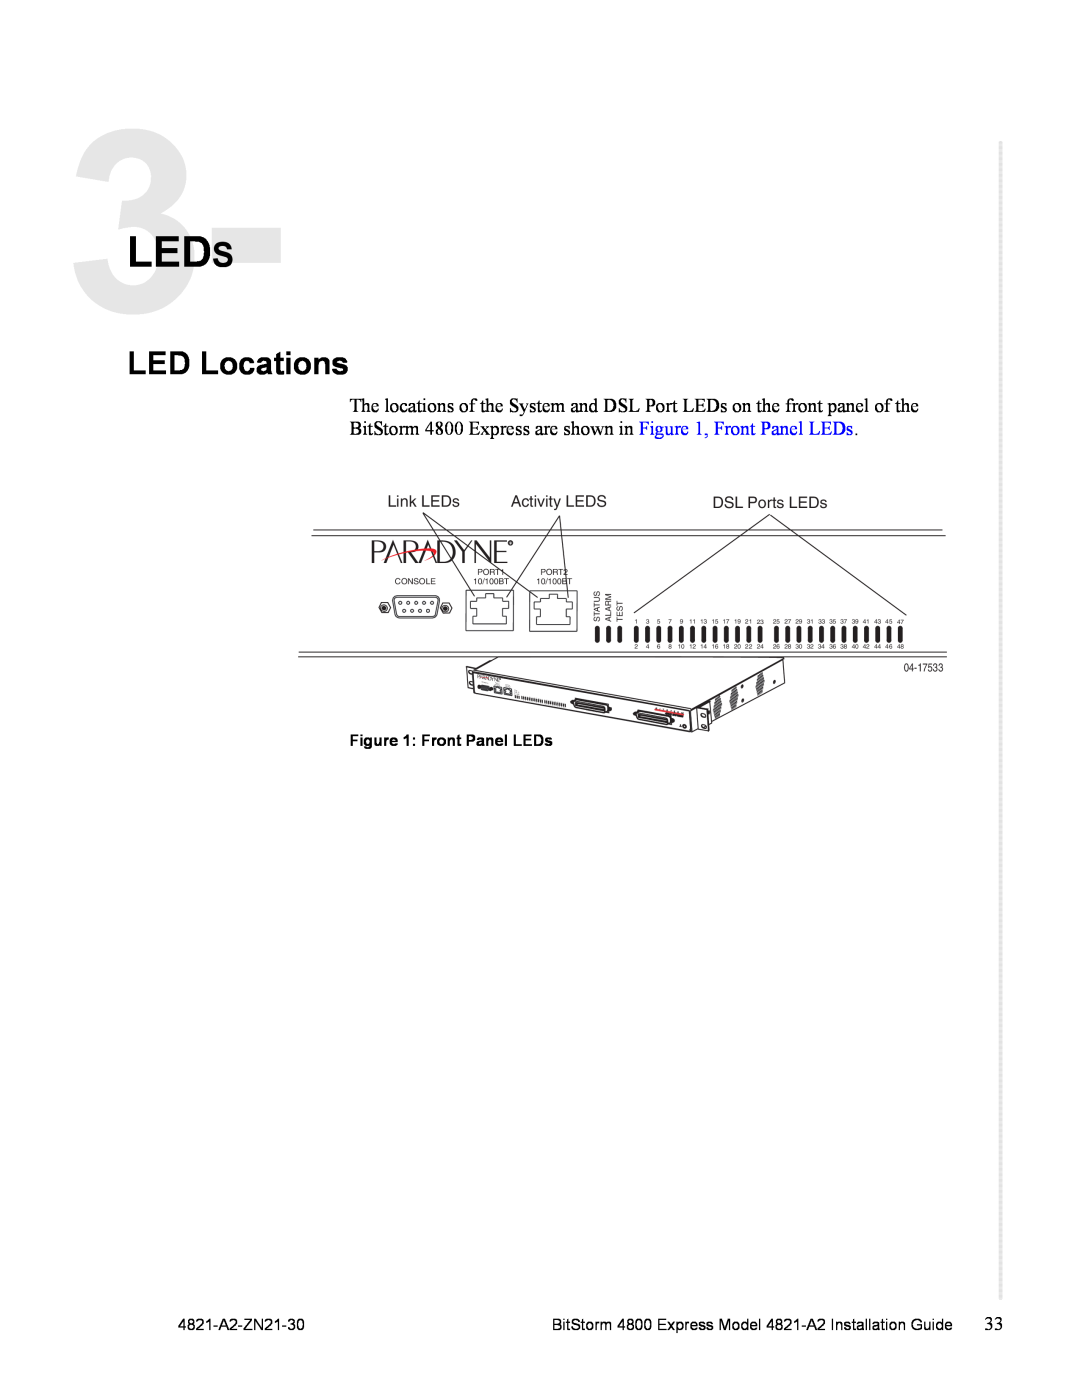 Zhone Technologies 4821-A2 manual LED Locations, Leds, Link LEDs, Activity LEDS, DSL Ports LEDs, Front Panel LEDs, 04-17533 